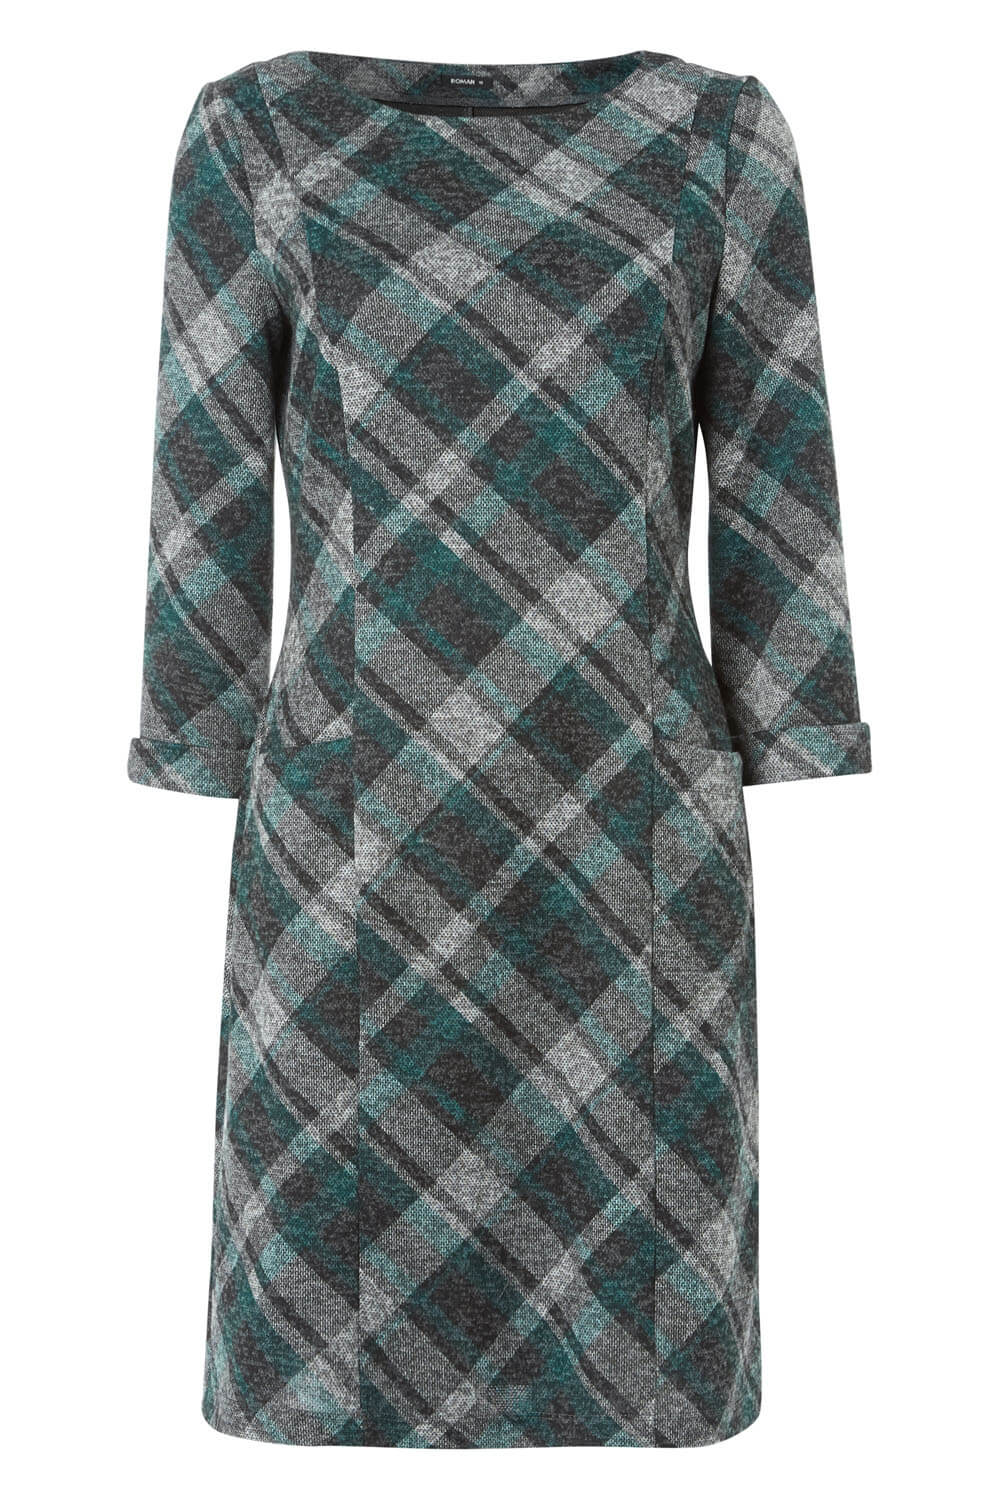 Green Check Print 3/4 Sleeve Shift Dress, Image 5 of 5